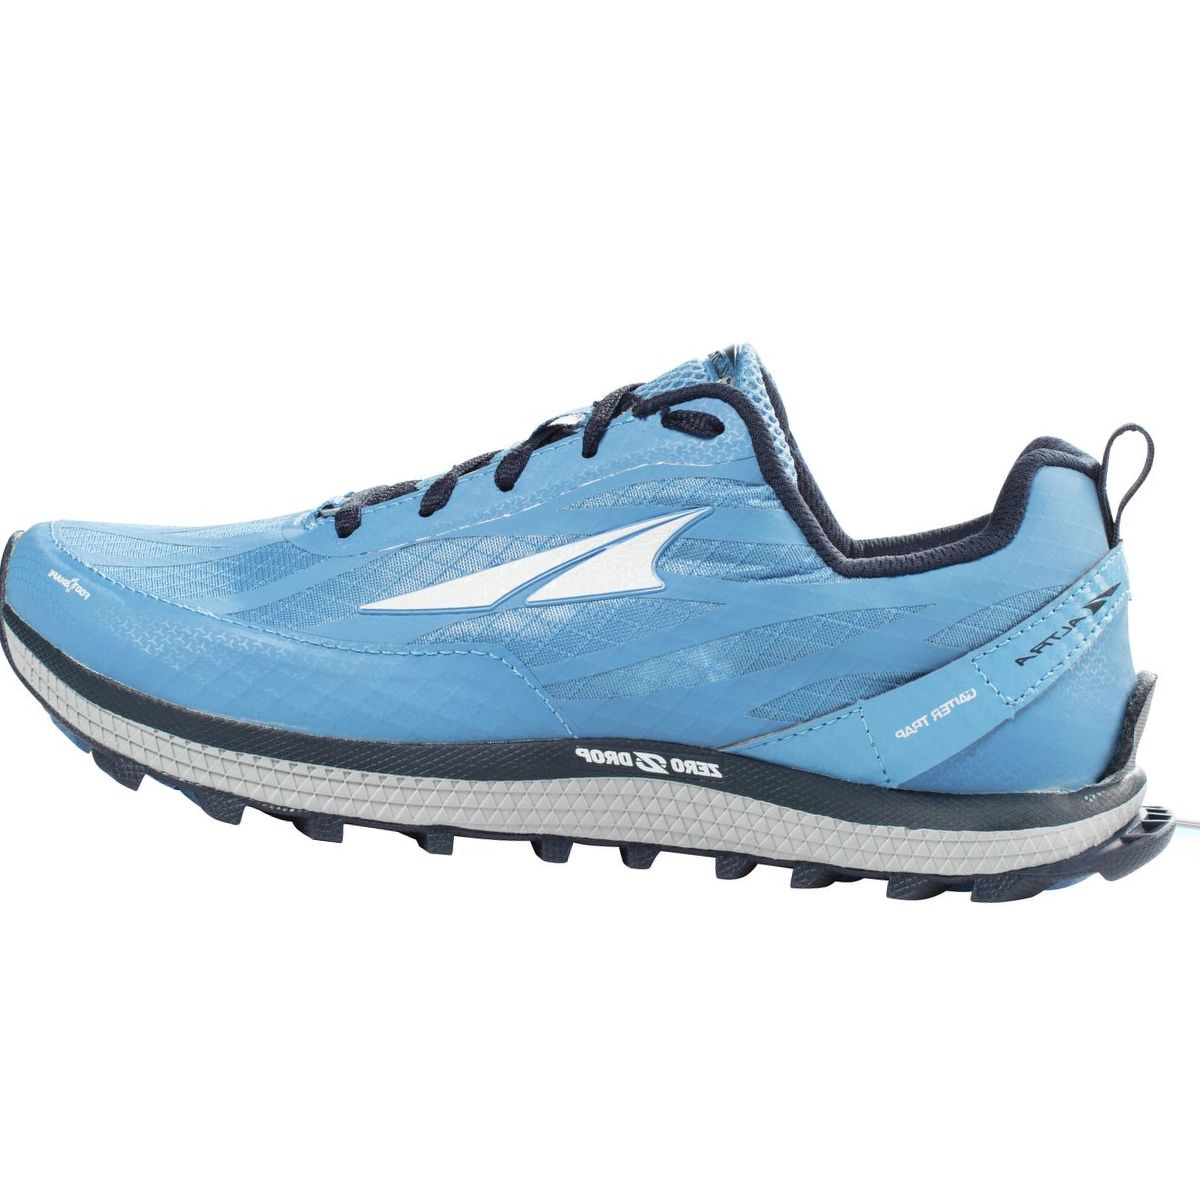 Altra Superior 3.5 Trail Running Shoe - Women's